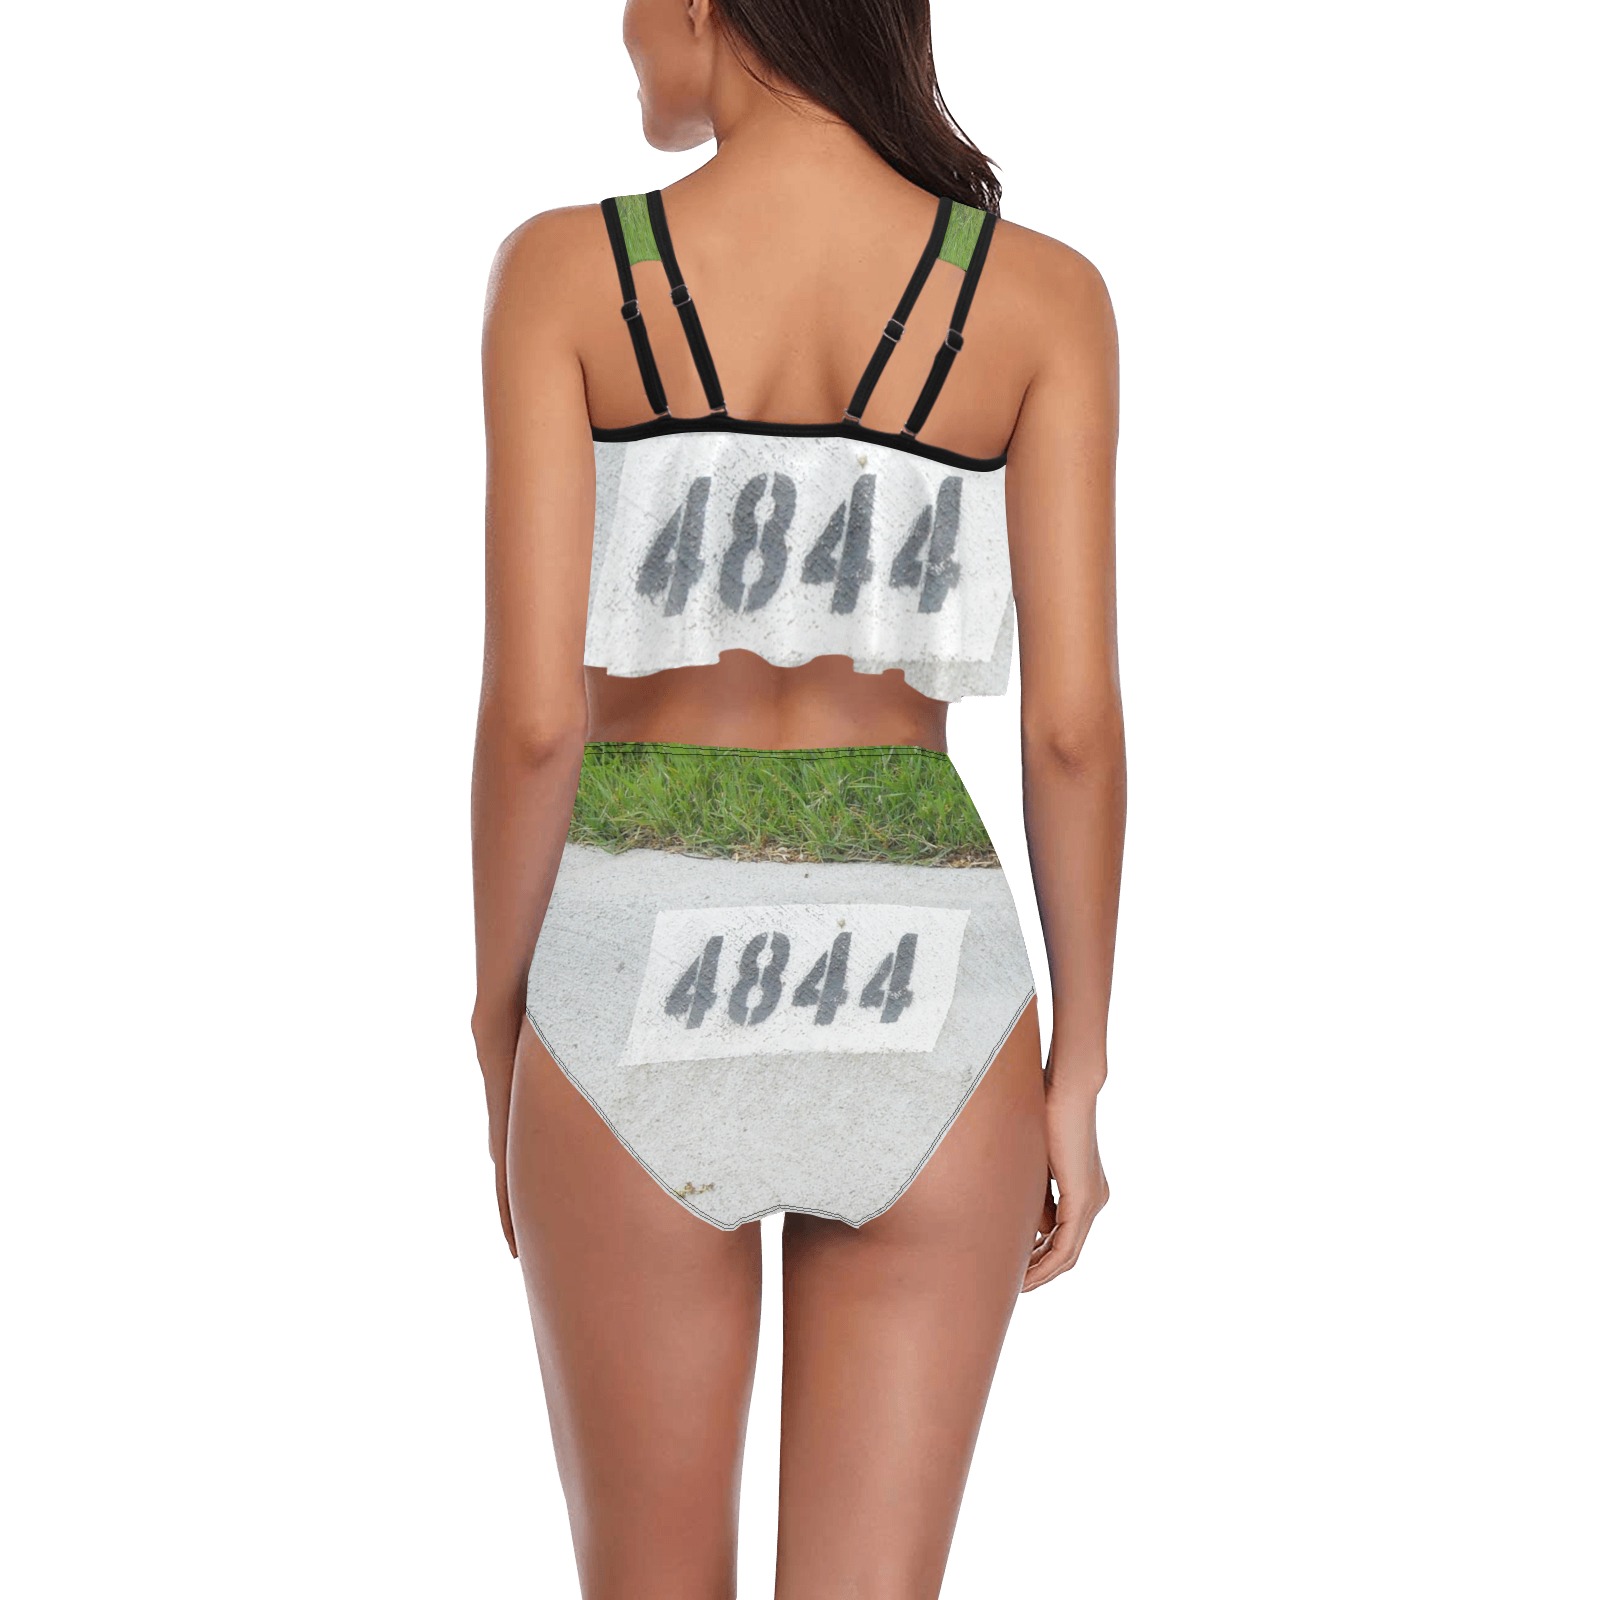 Street Number 4844 with Green Top High Waisted Flounce Bikini Set (Model S24)